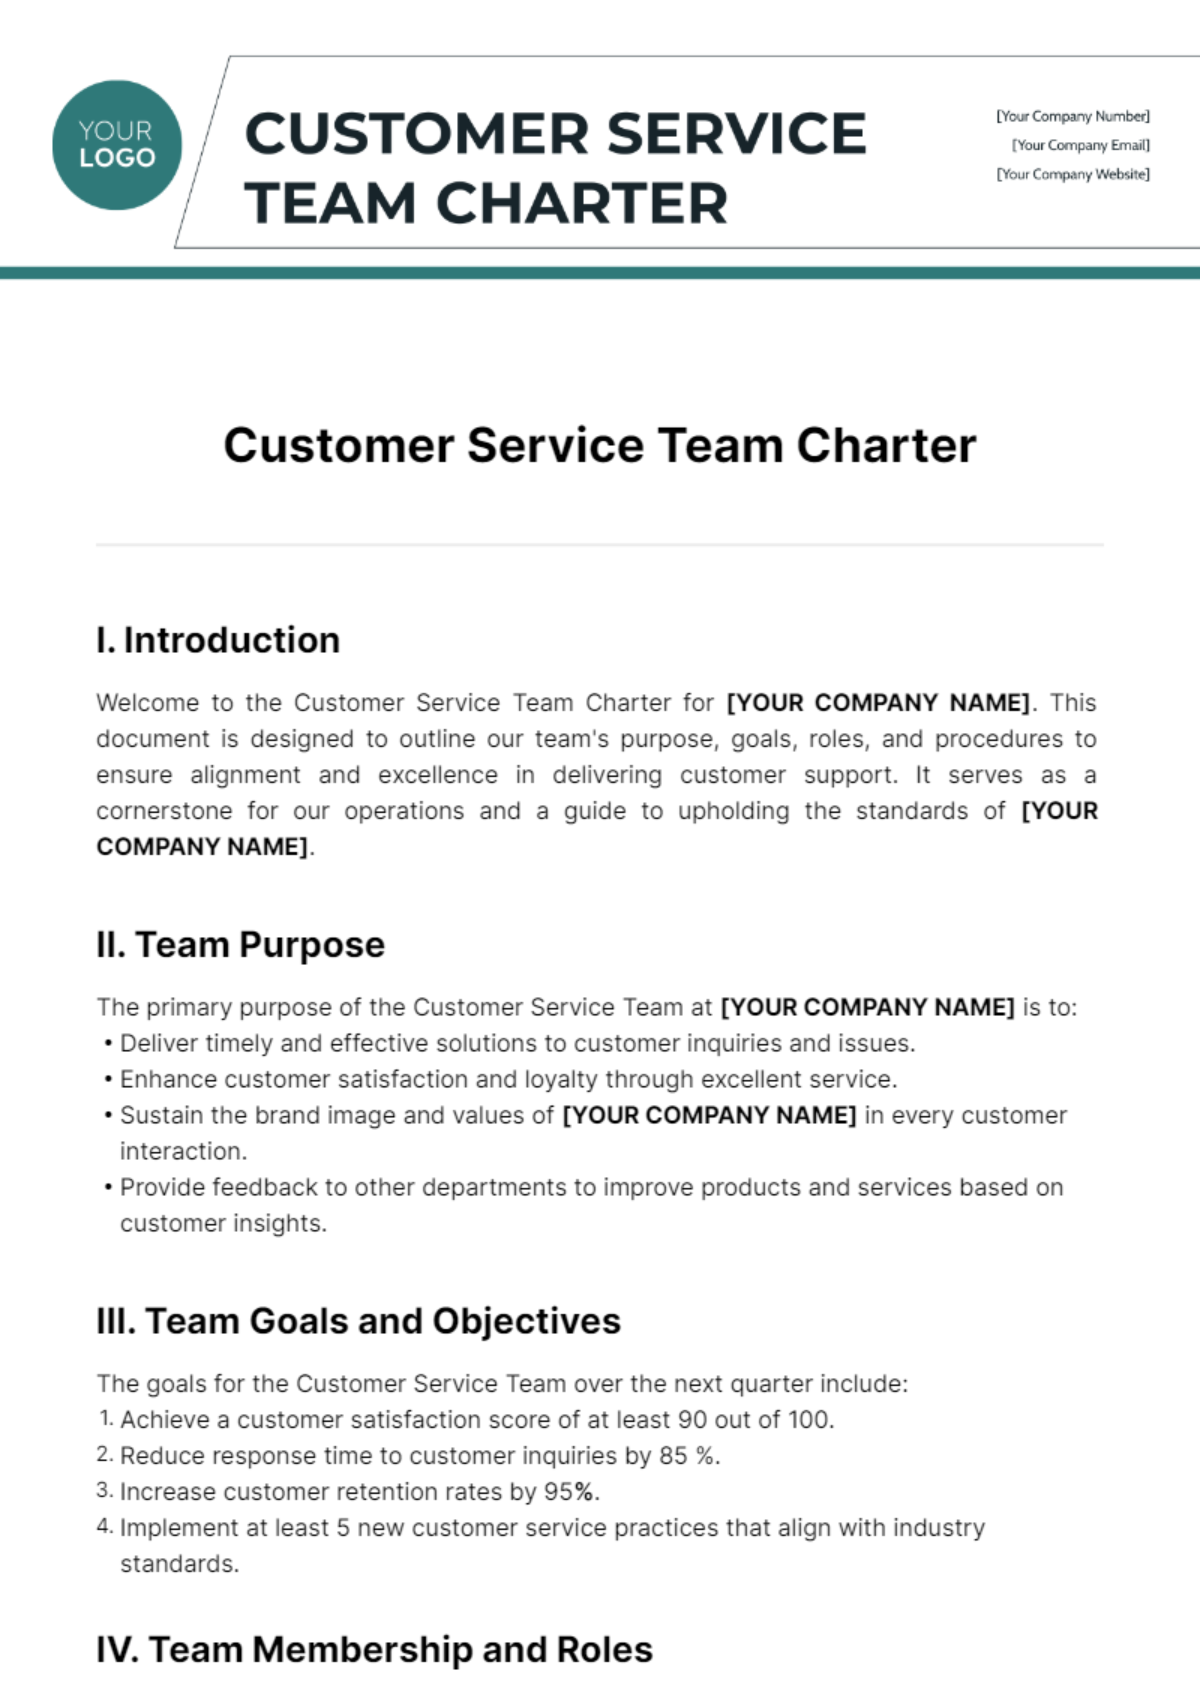 Customer Service Team Charter Template